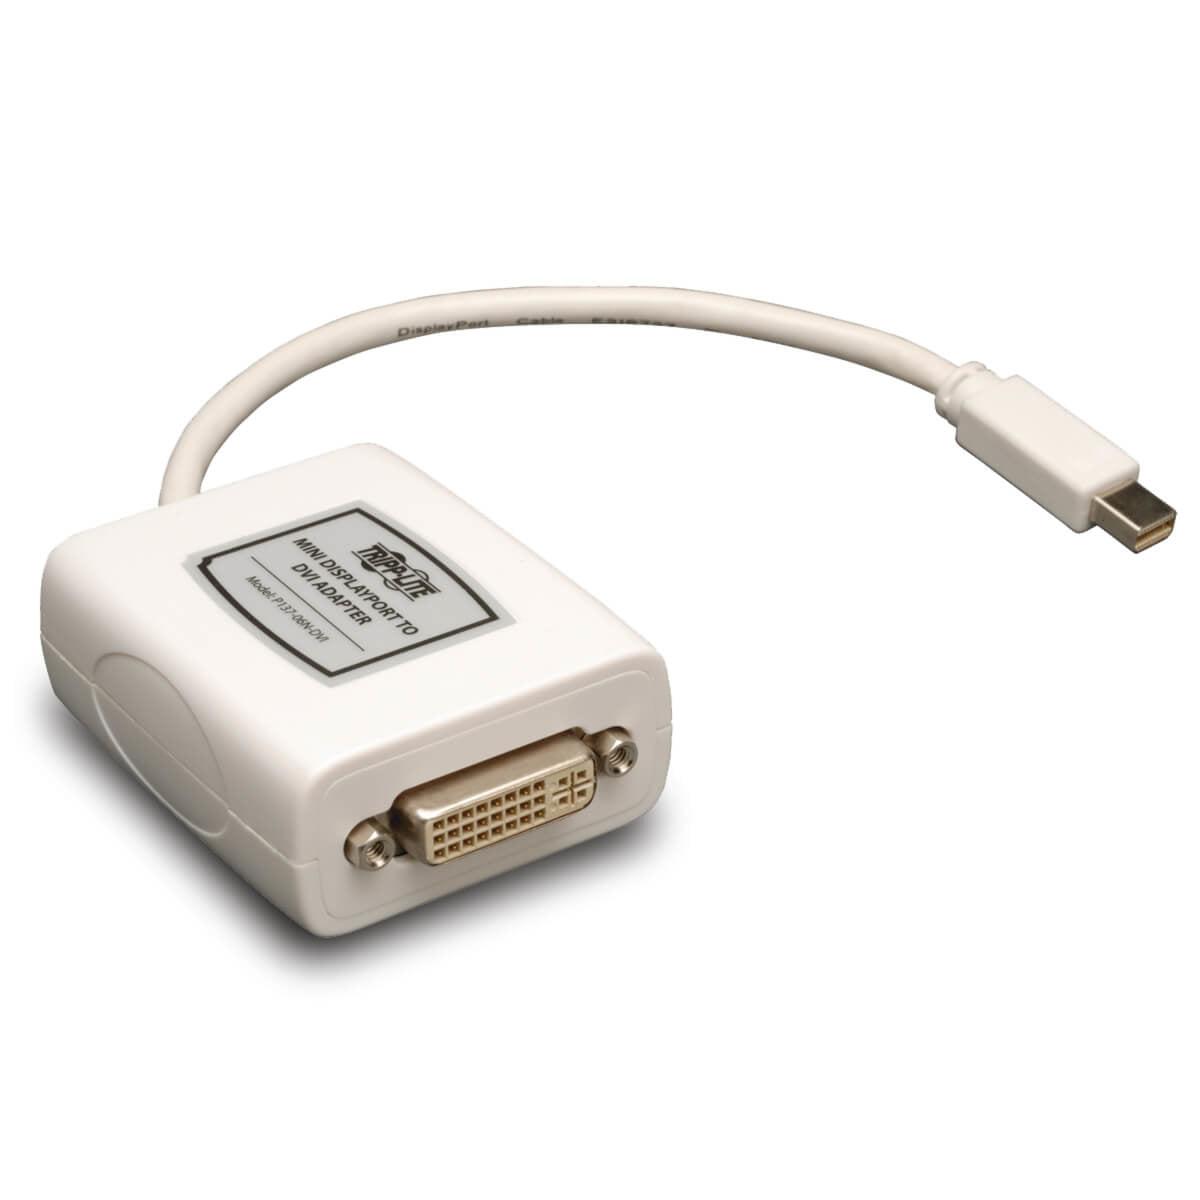 Tripp Lite P137-06N-Dvi Keyspan Mini Displayport To Dvi Adapter, Video Converter For Mac/Pc, White (M/F), 6-In. (15.24 Cm)